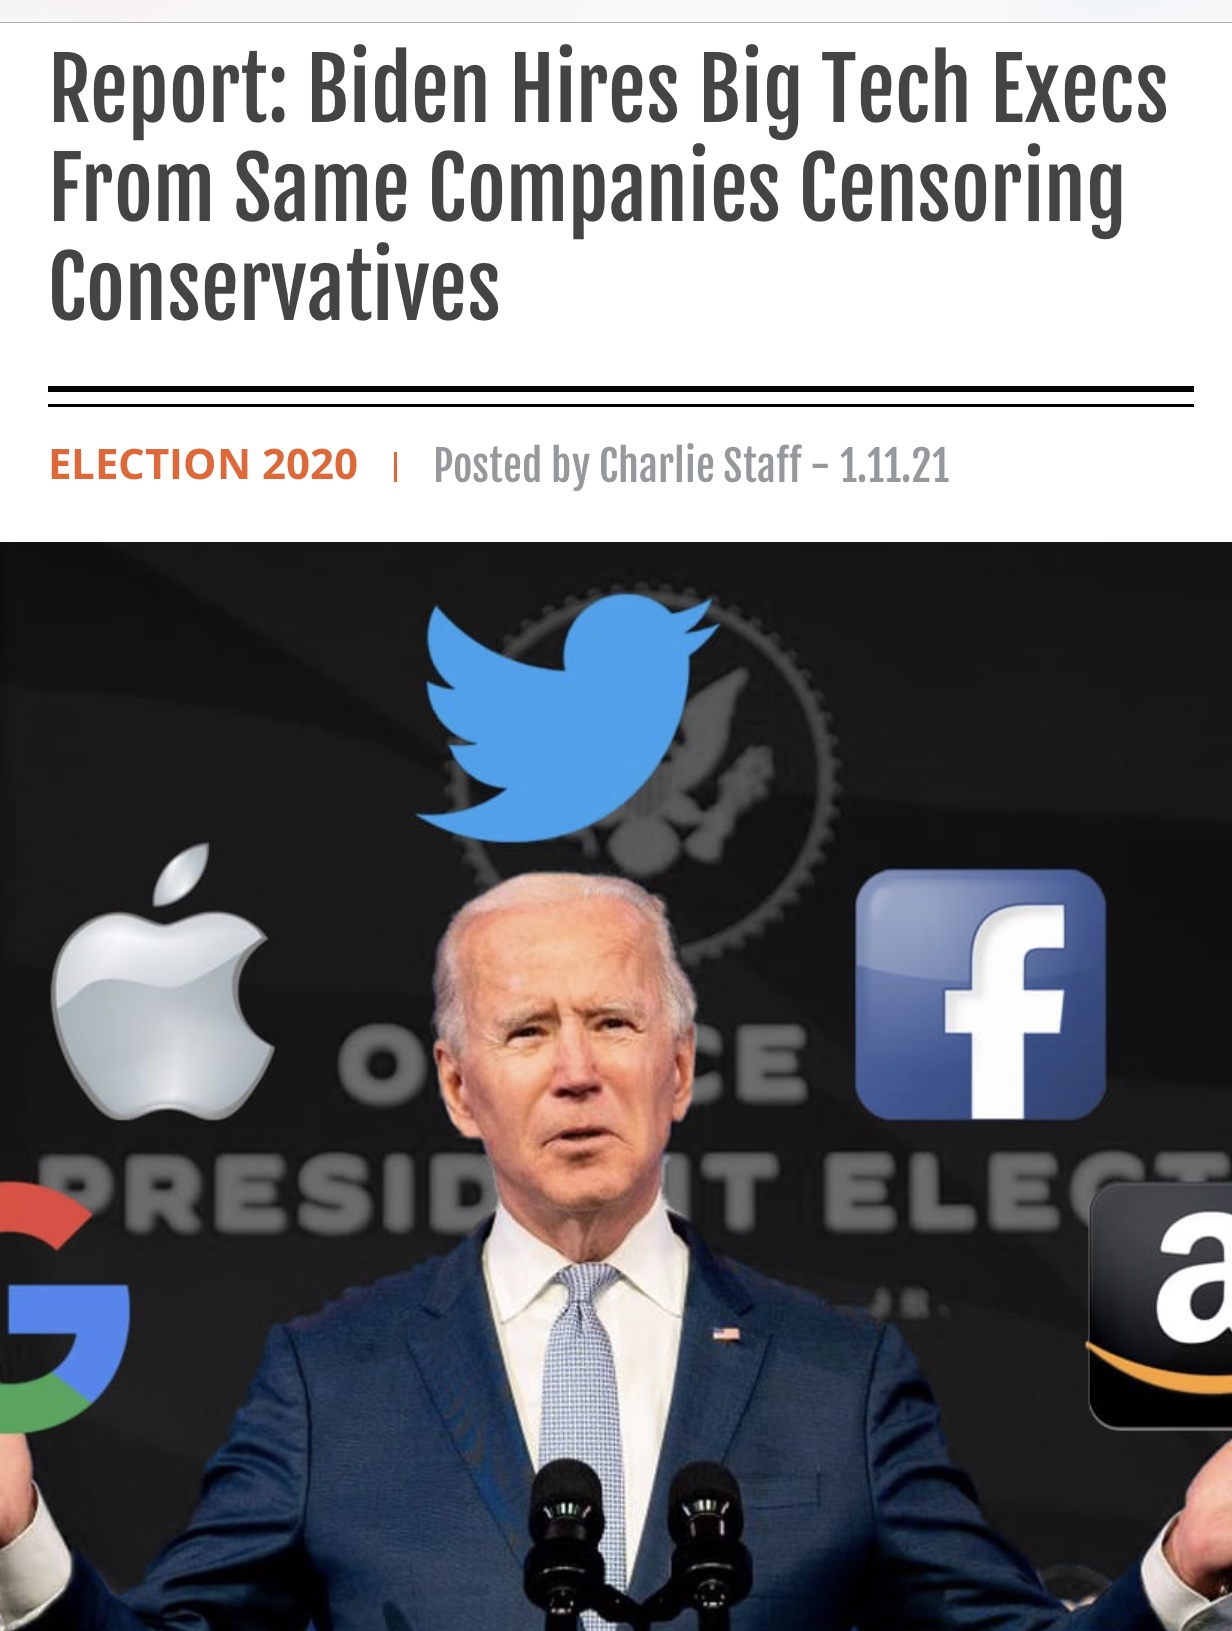 Biden Hires Big Tech Execs From Same Companies Censoring Conservatives